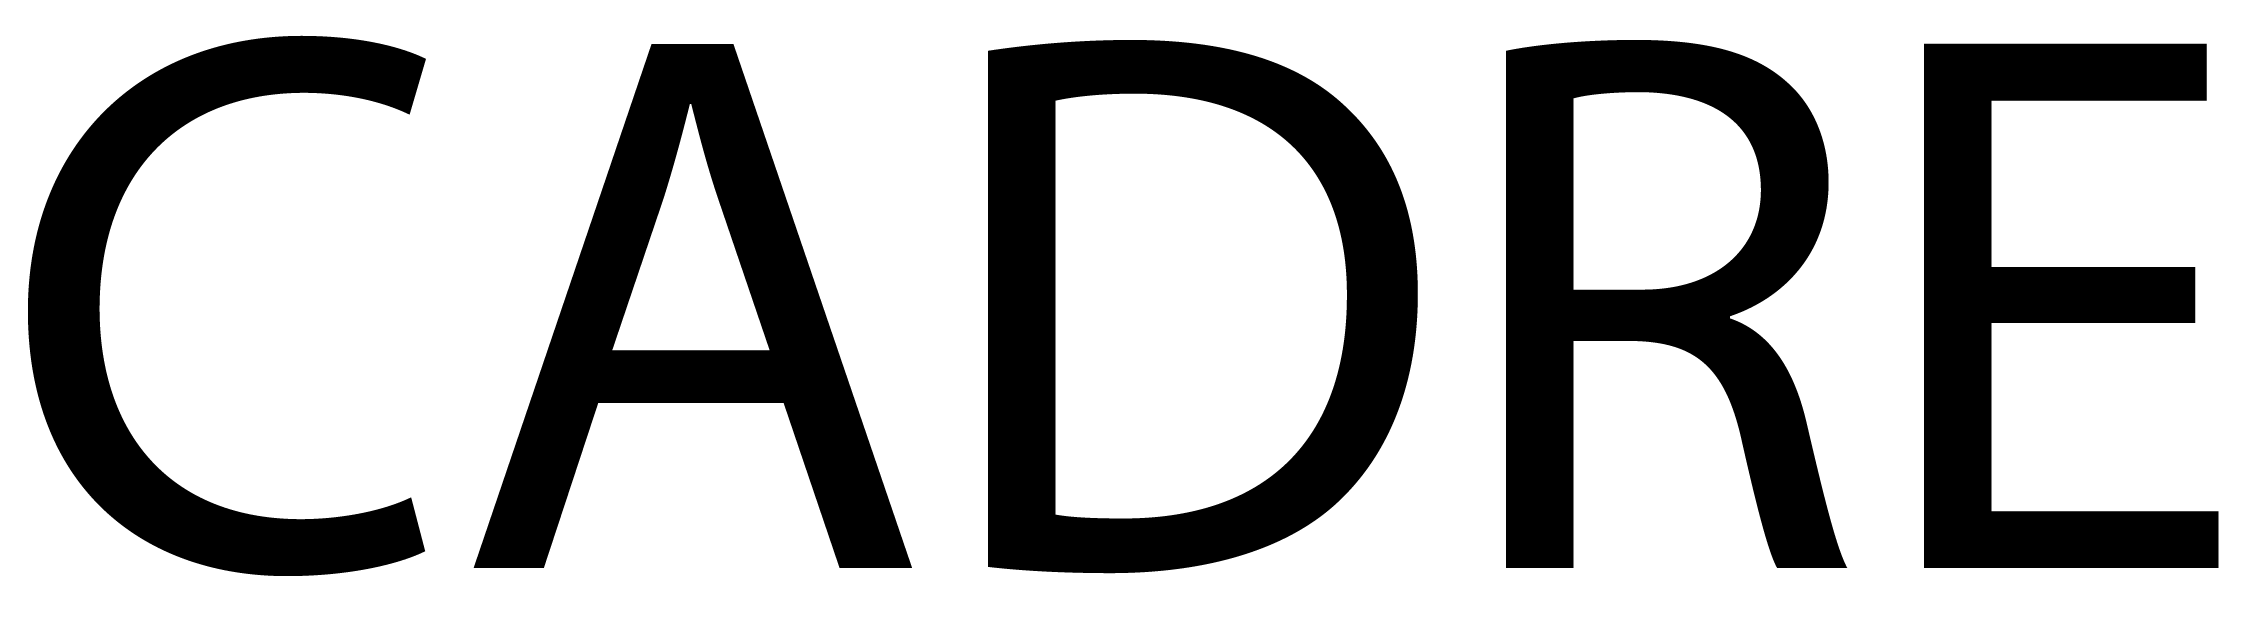 Cadre logo-03.png